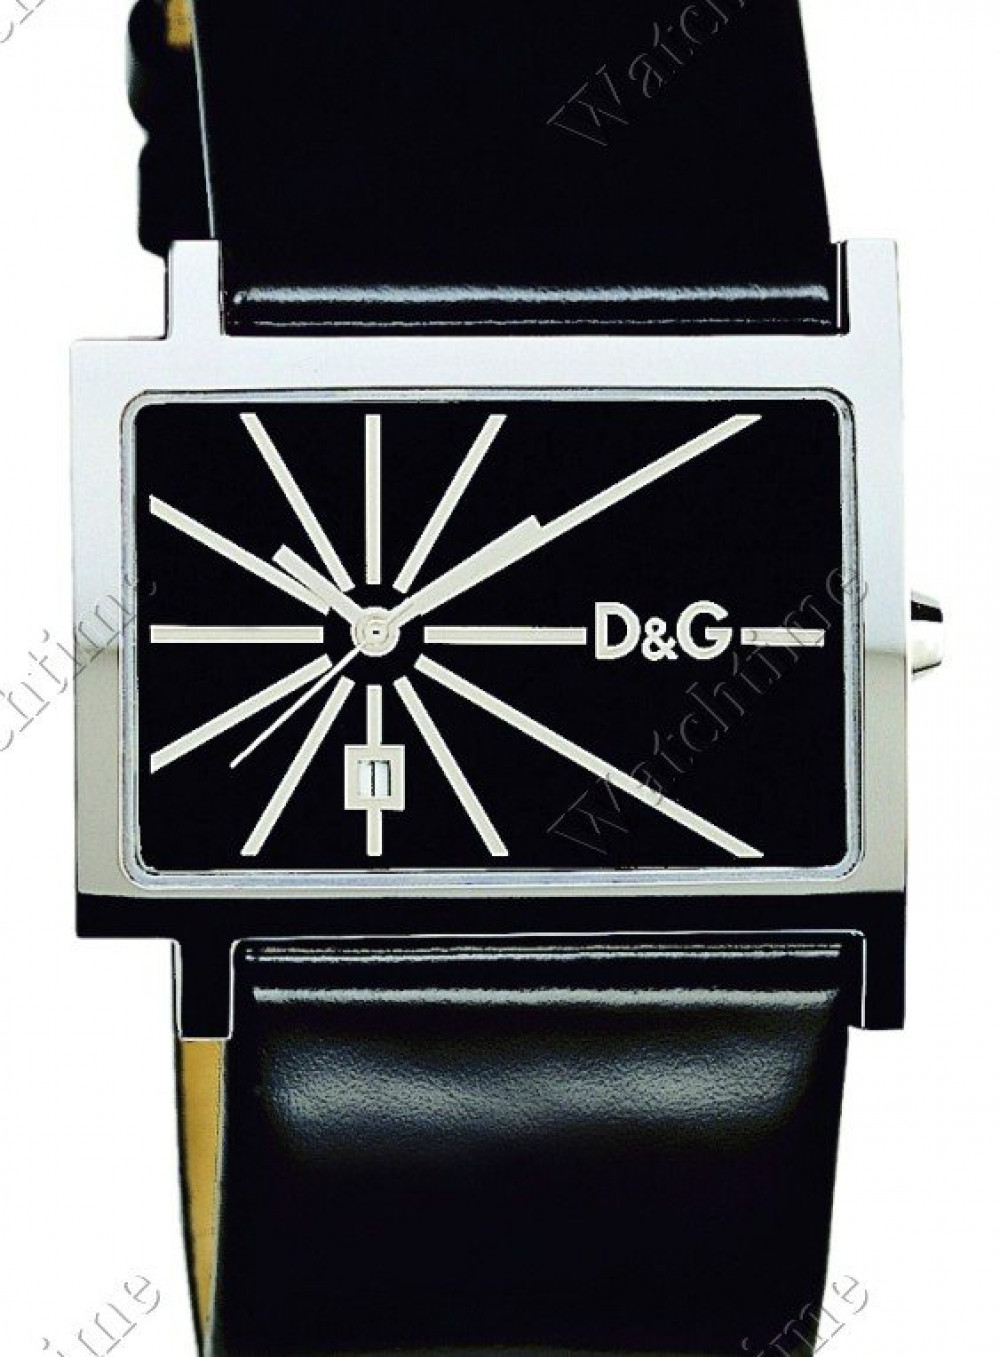 Zegarek firmy D&G Dolce & Gabbana Time, model One Way